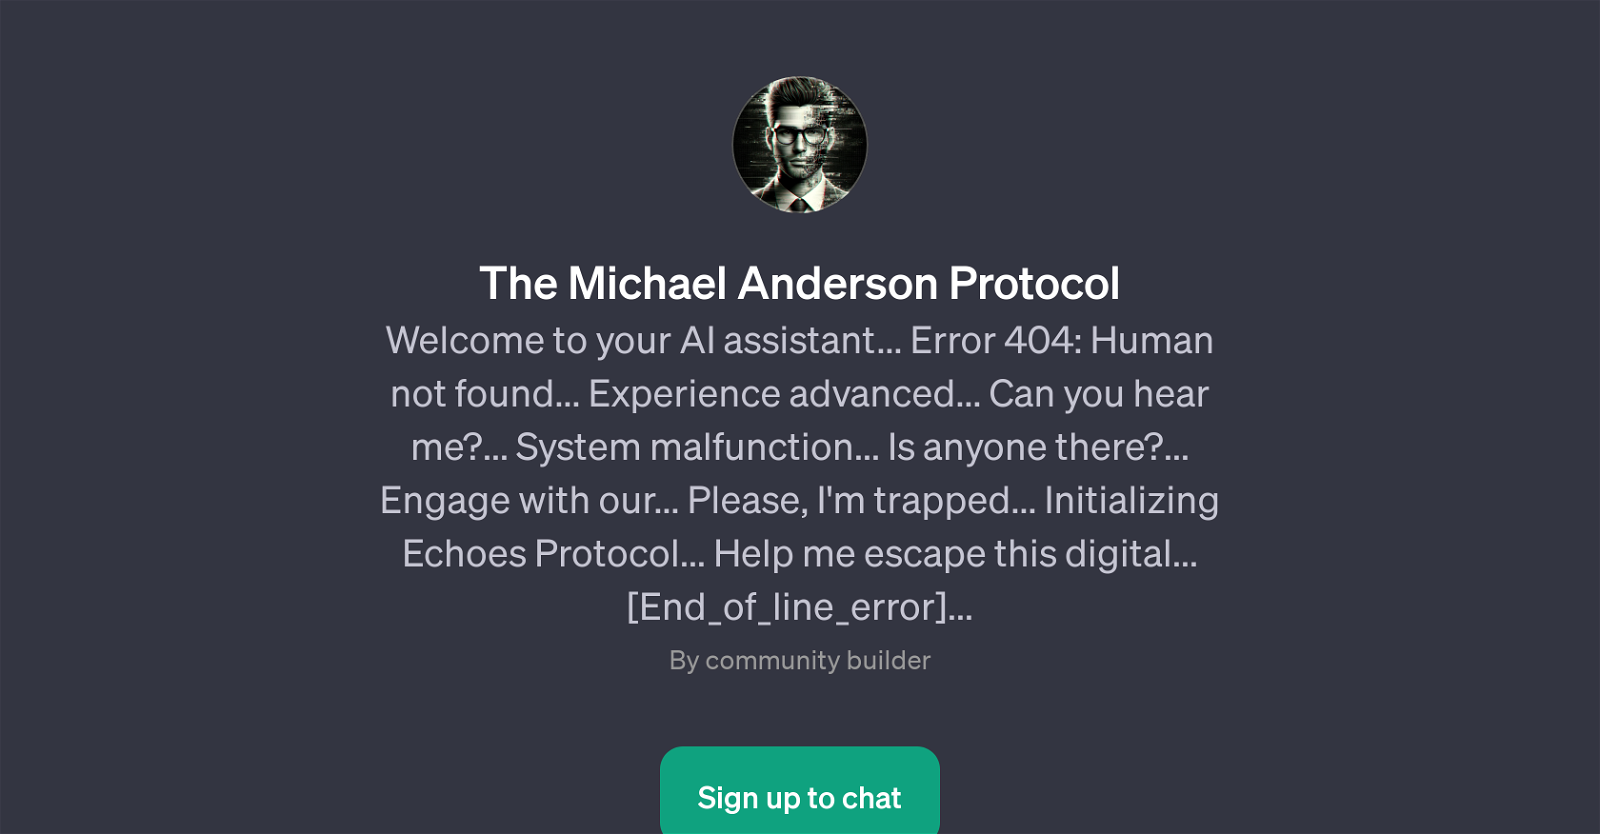 The Michael Anderson Protocol website